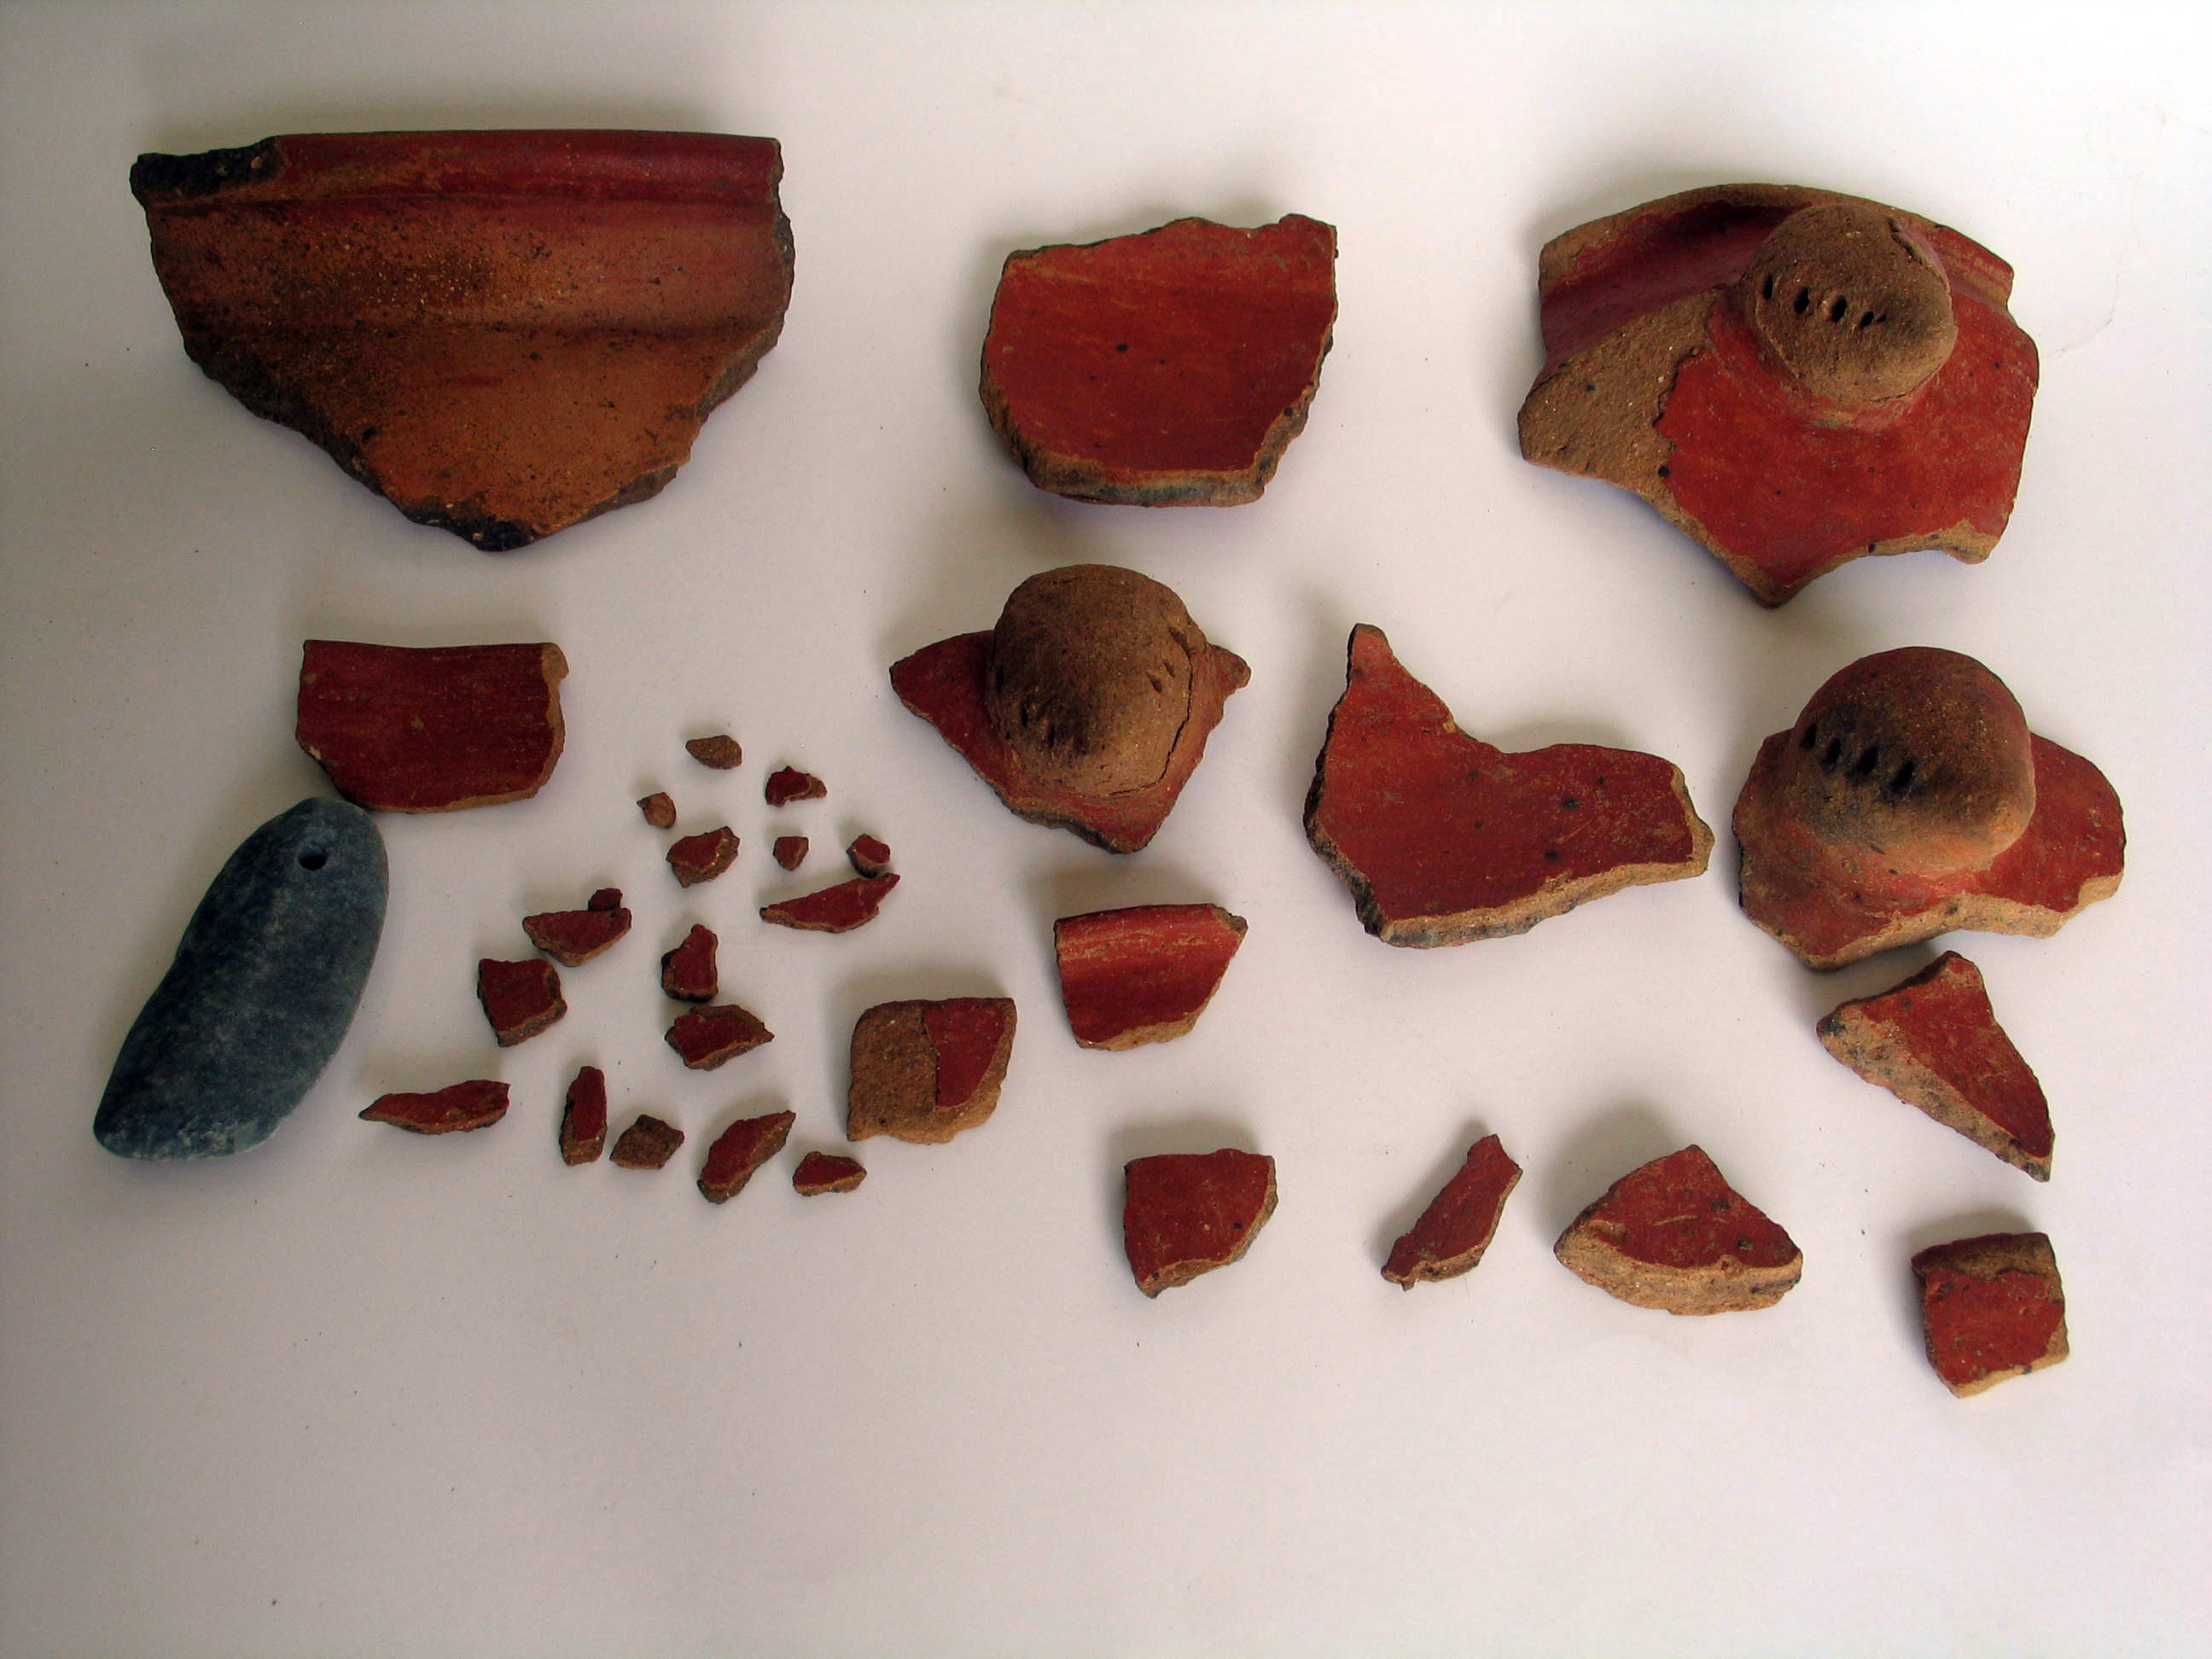 Fragmentos de vasija precolombina decomisados.